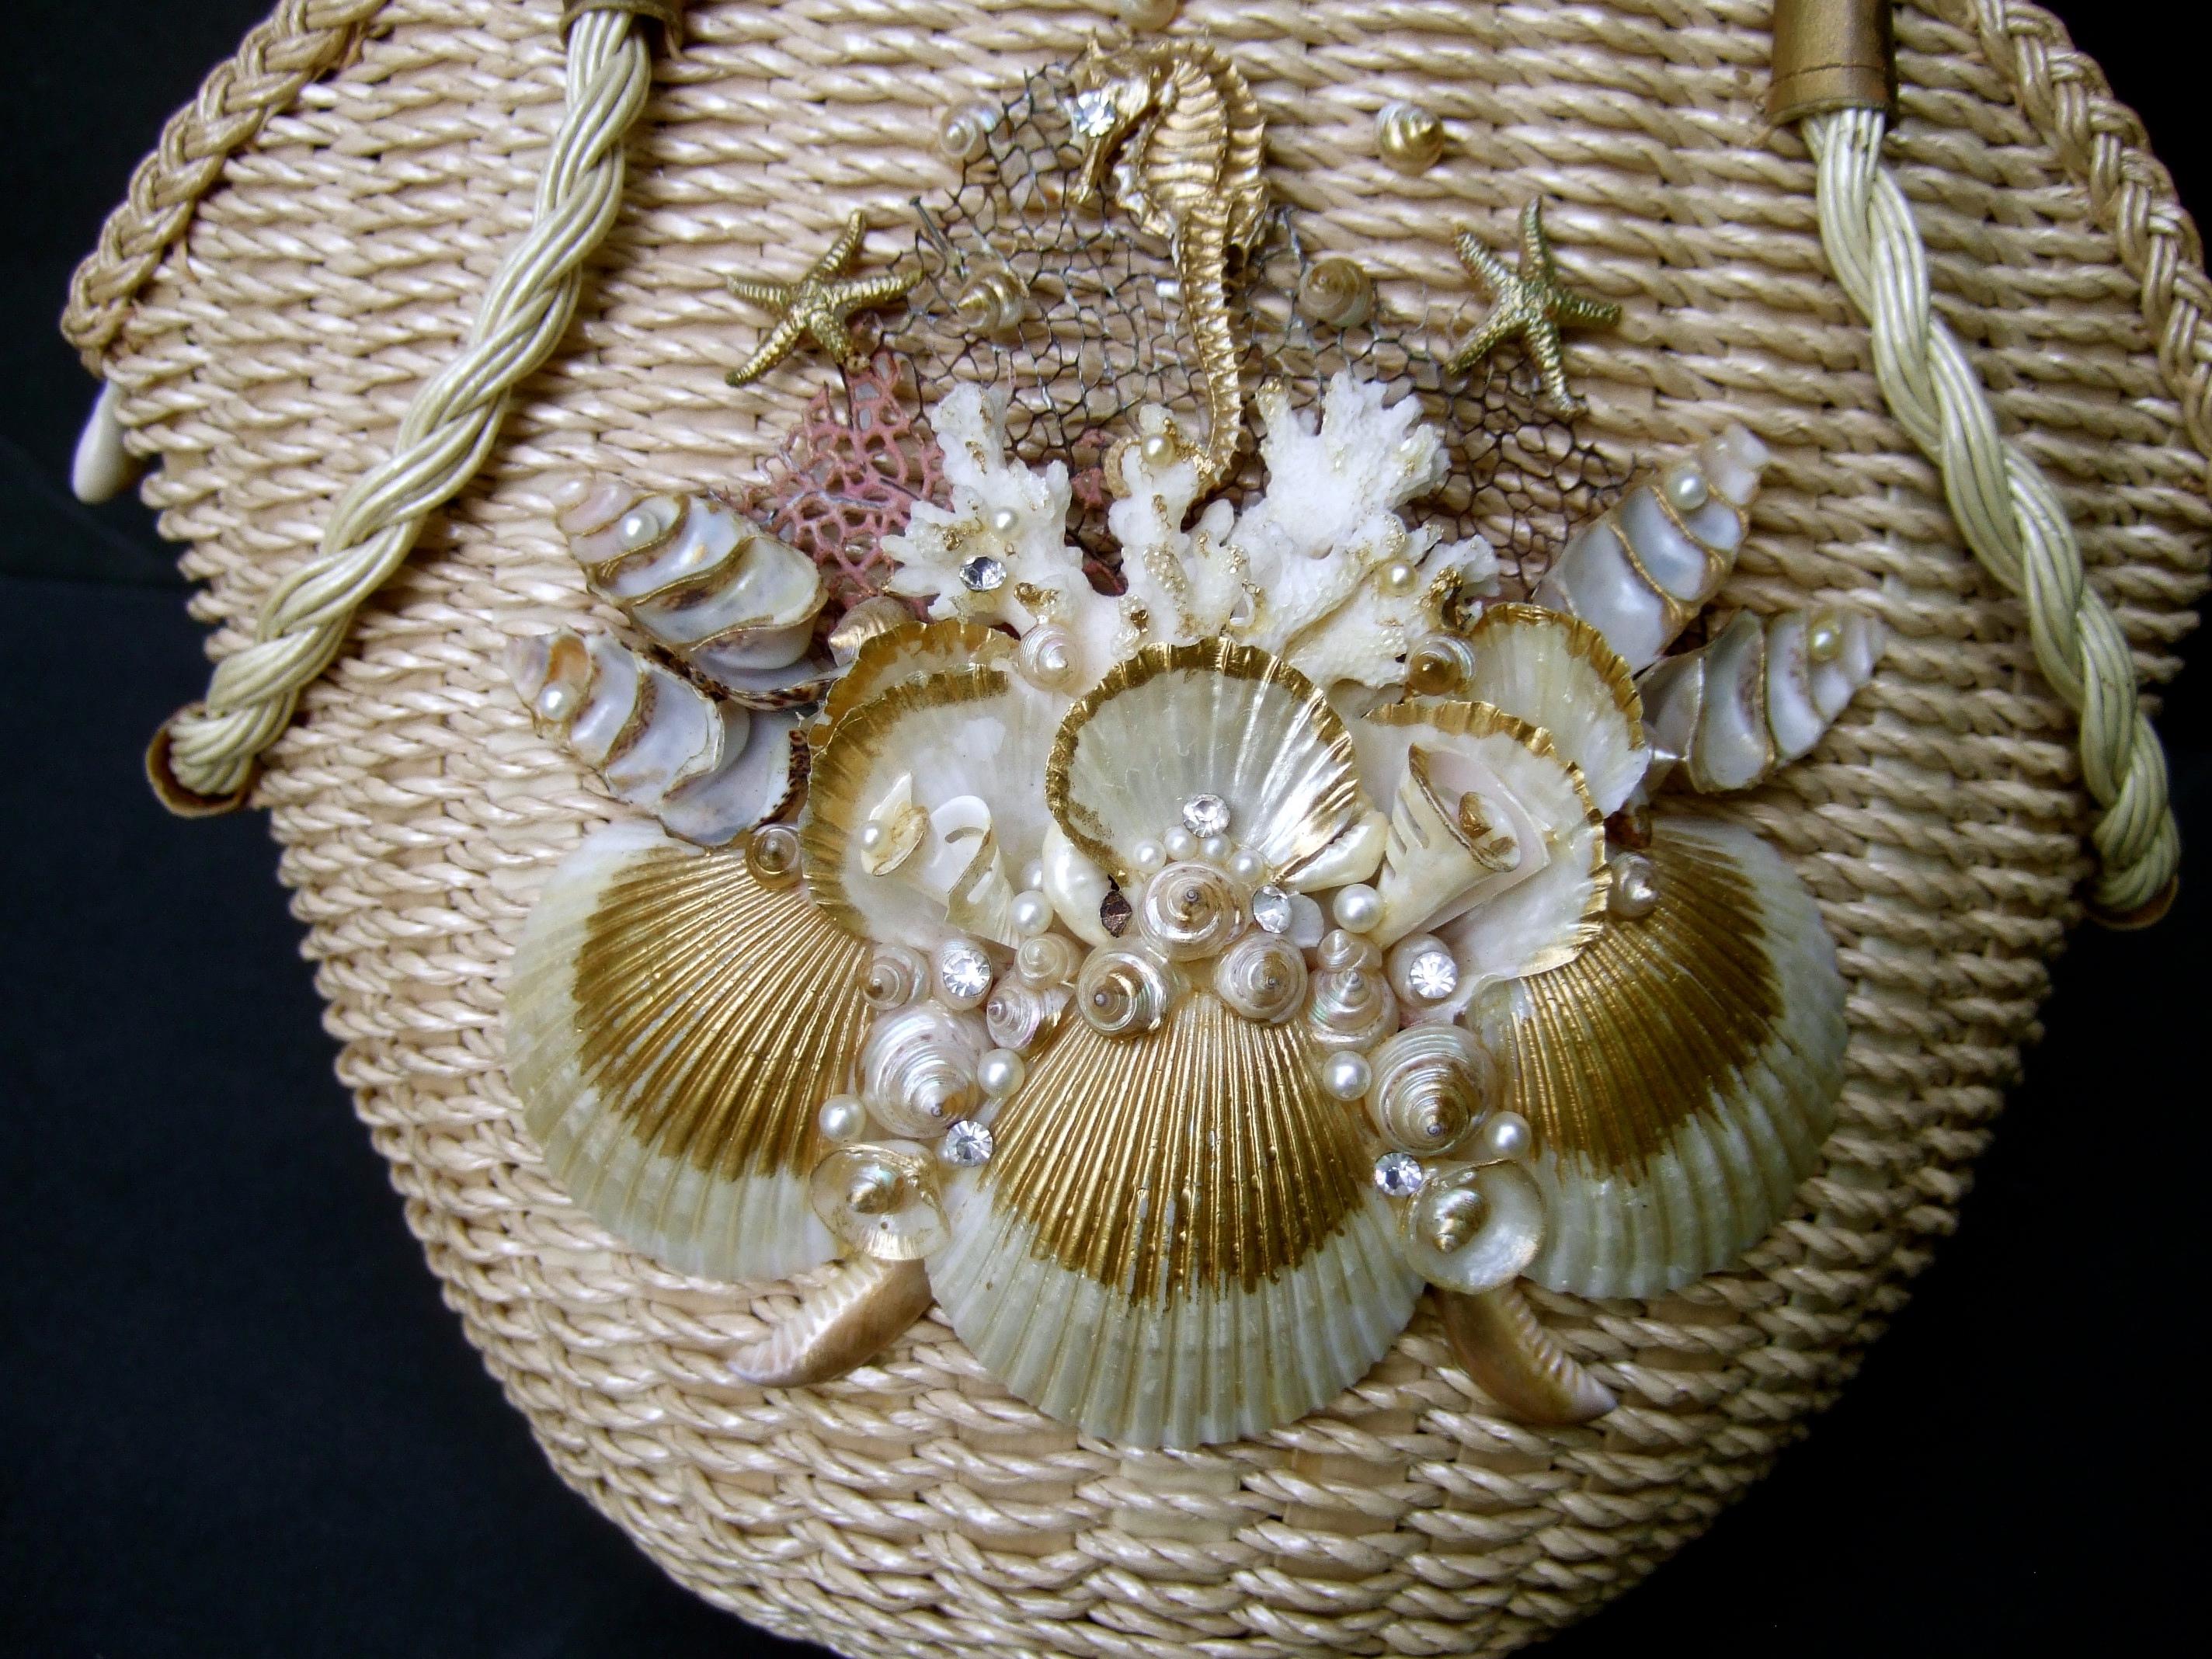 Brown Charming Handmade Artisan Sea Life Woven Wicker Rope Summer Handbag c 1970 For Sale